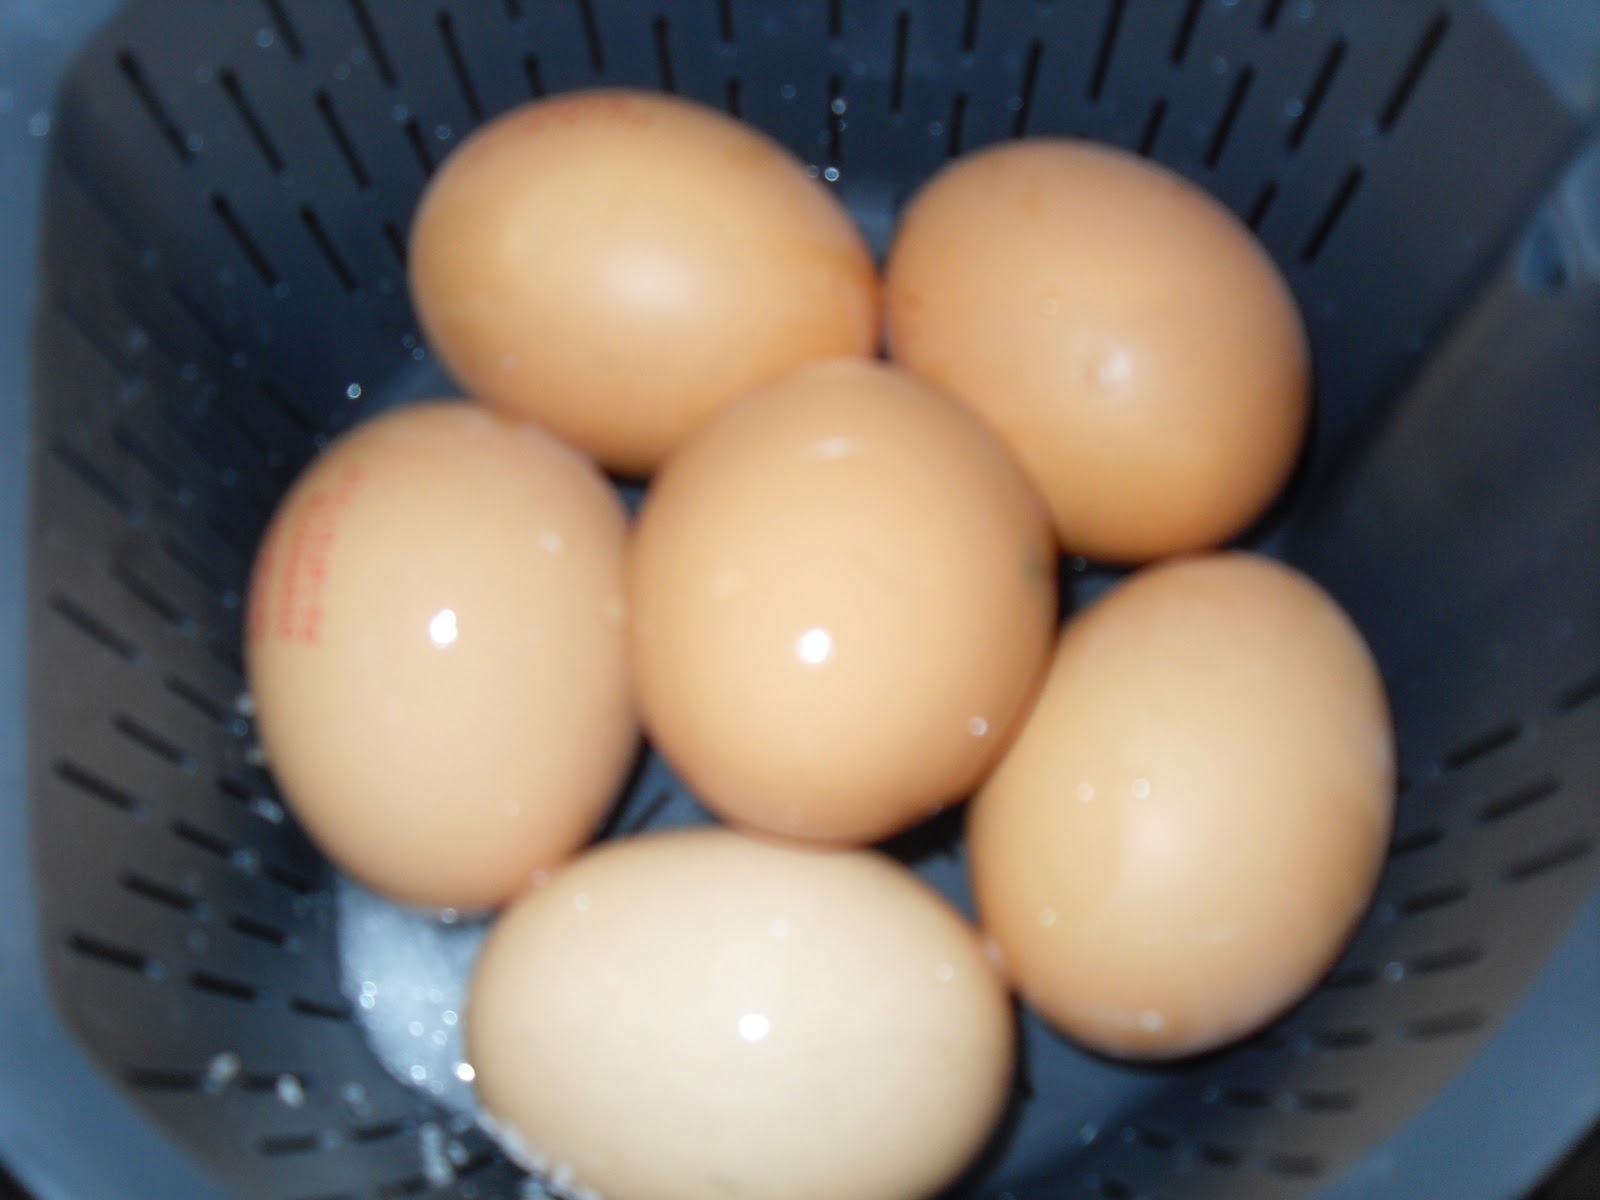 Como cocer huevos? - Huevos y quesos - Blog de MªGUADALUP CHINCOA BERMUDEZ  de Thermomix® Sevilla Florida